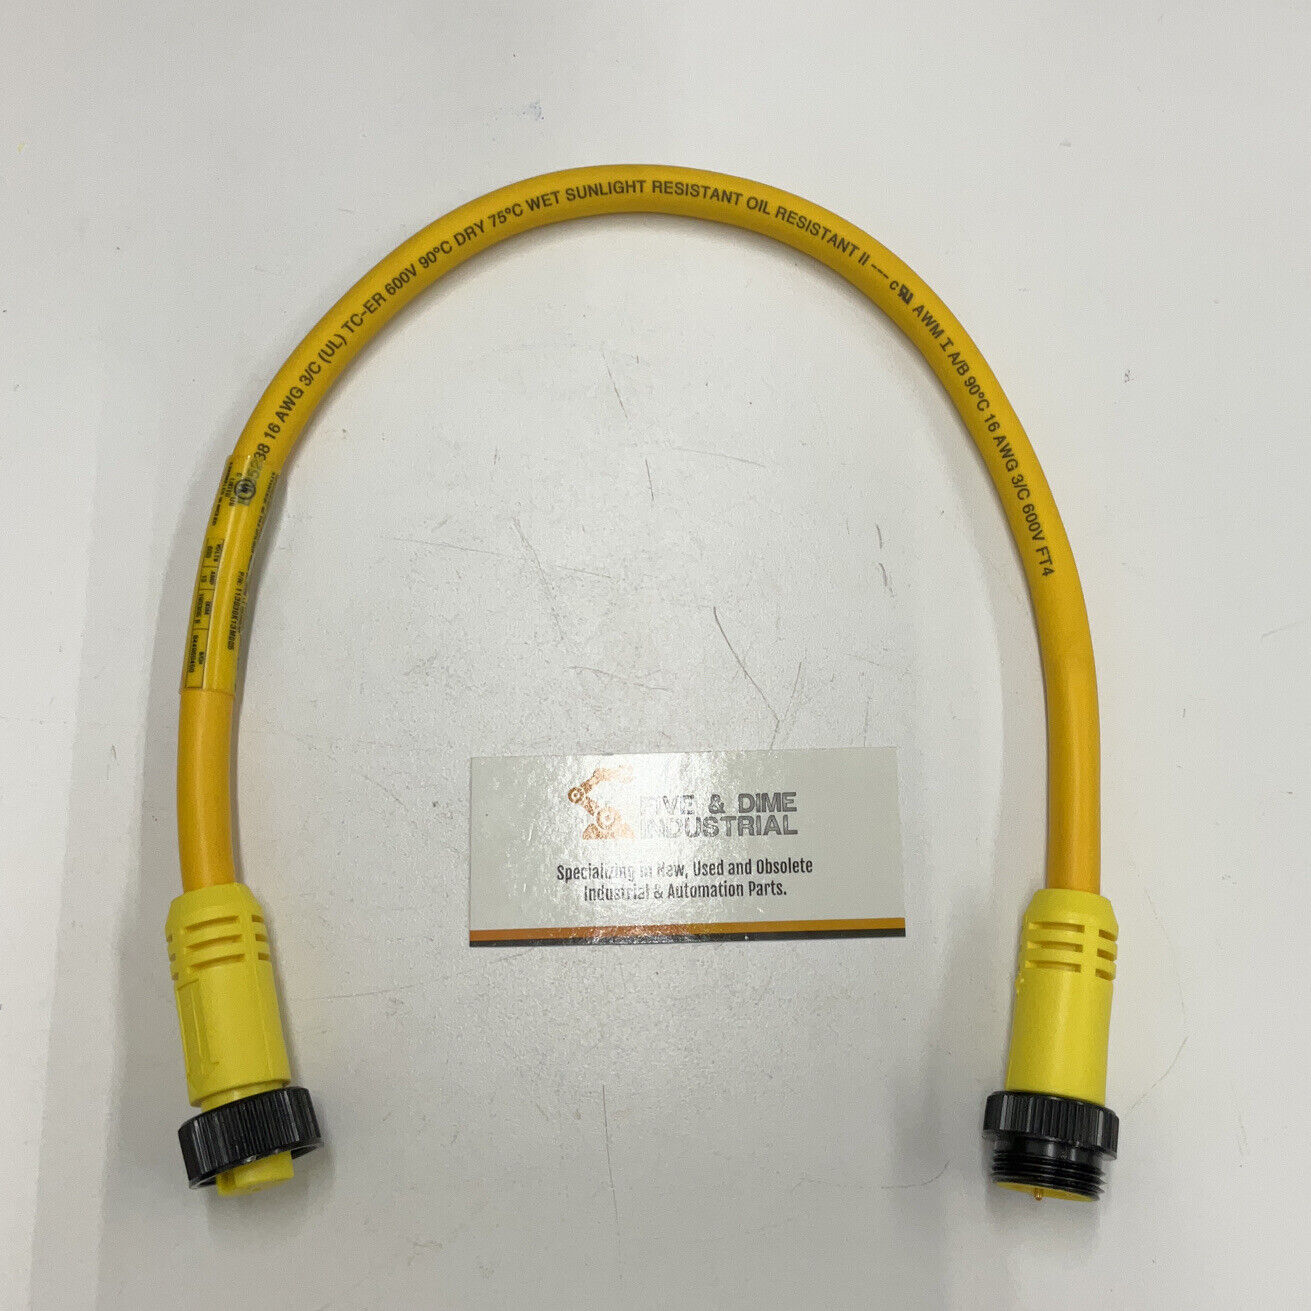 Brad Connectivity 1300102070 Mini Change 3-Pin Male/Female Flex Cable 0.5M YE199